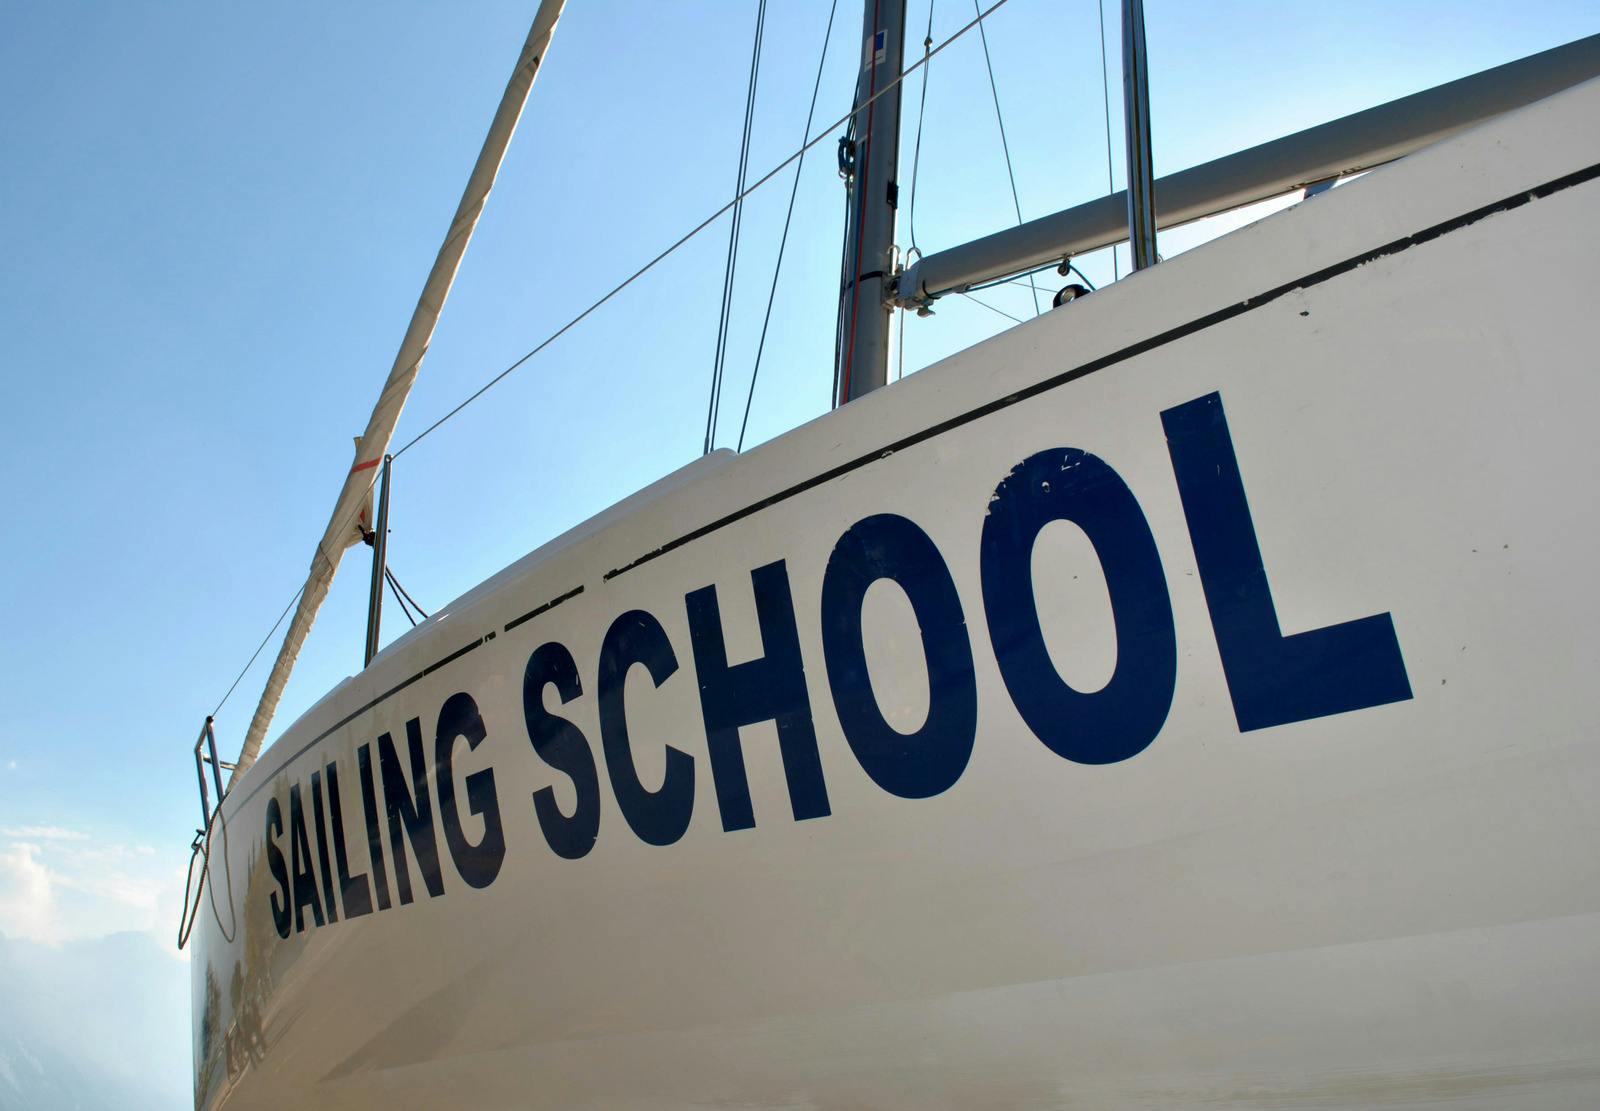 Sailing school